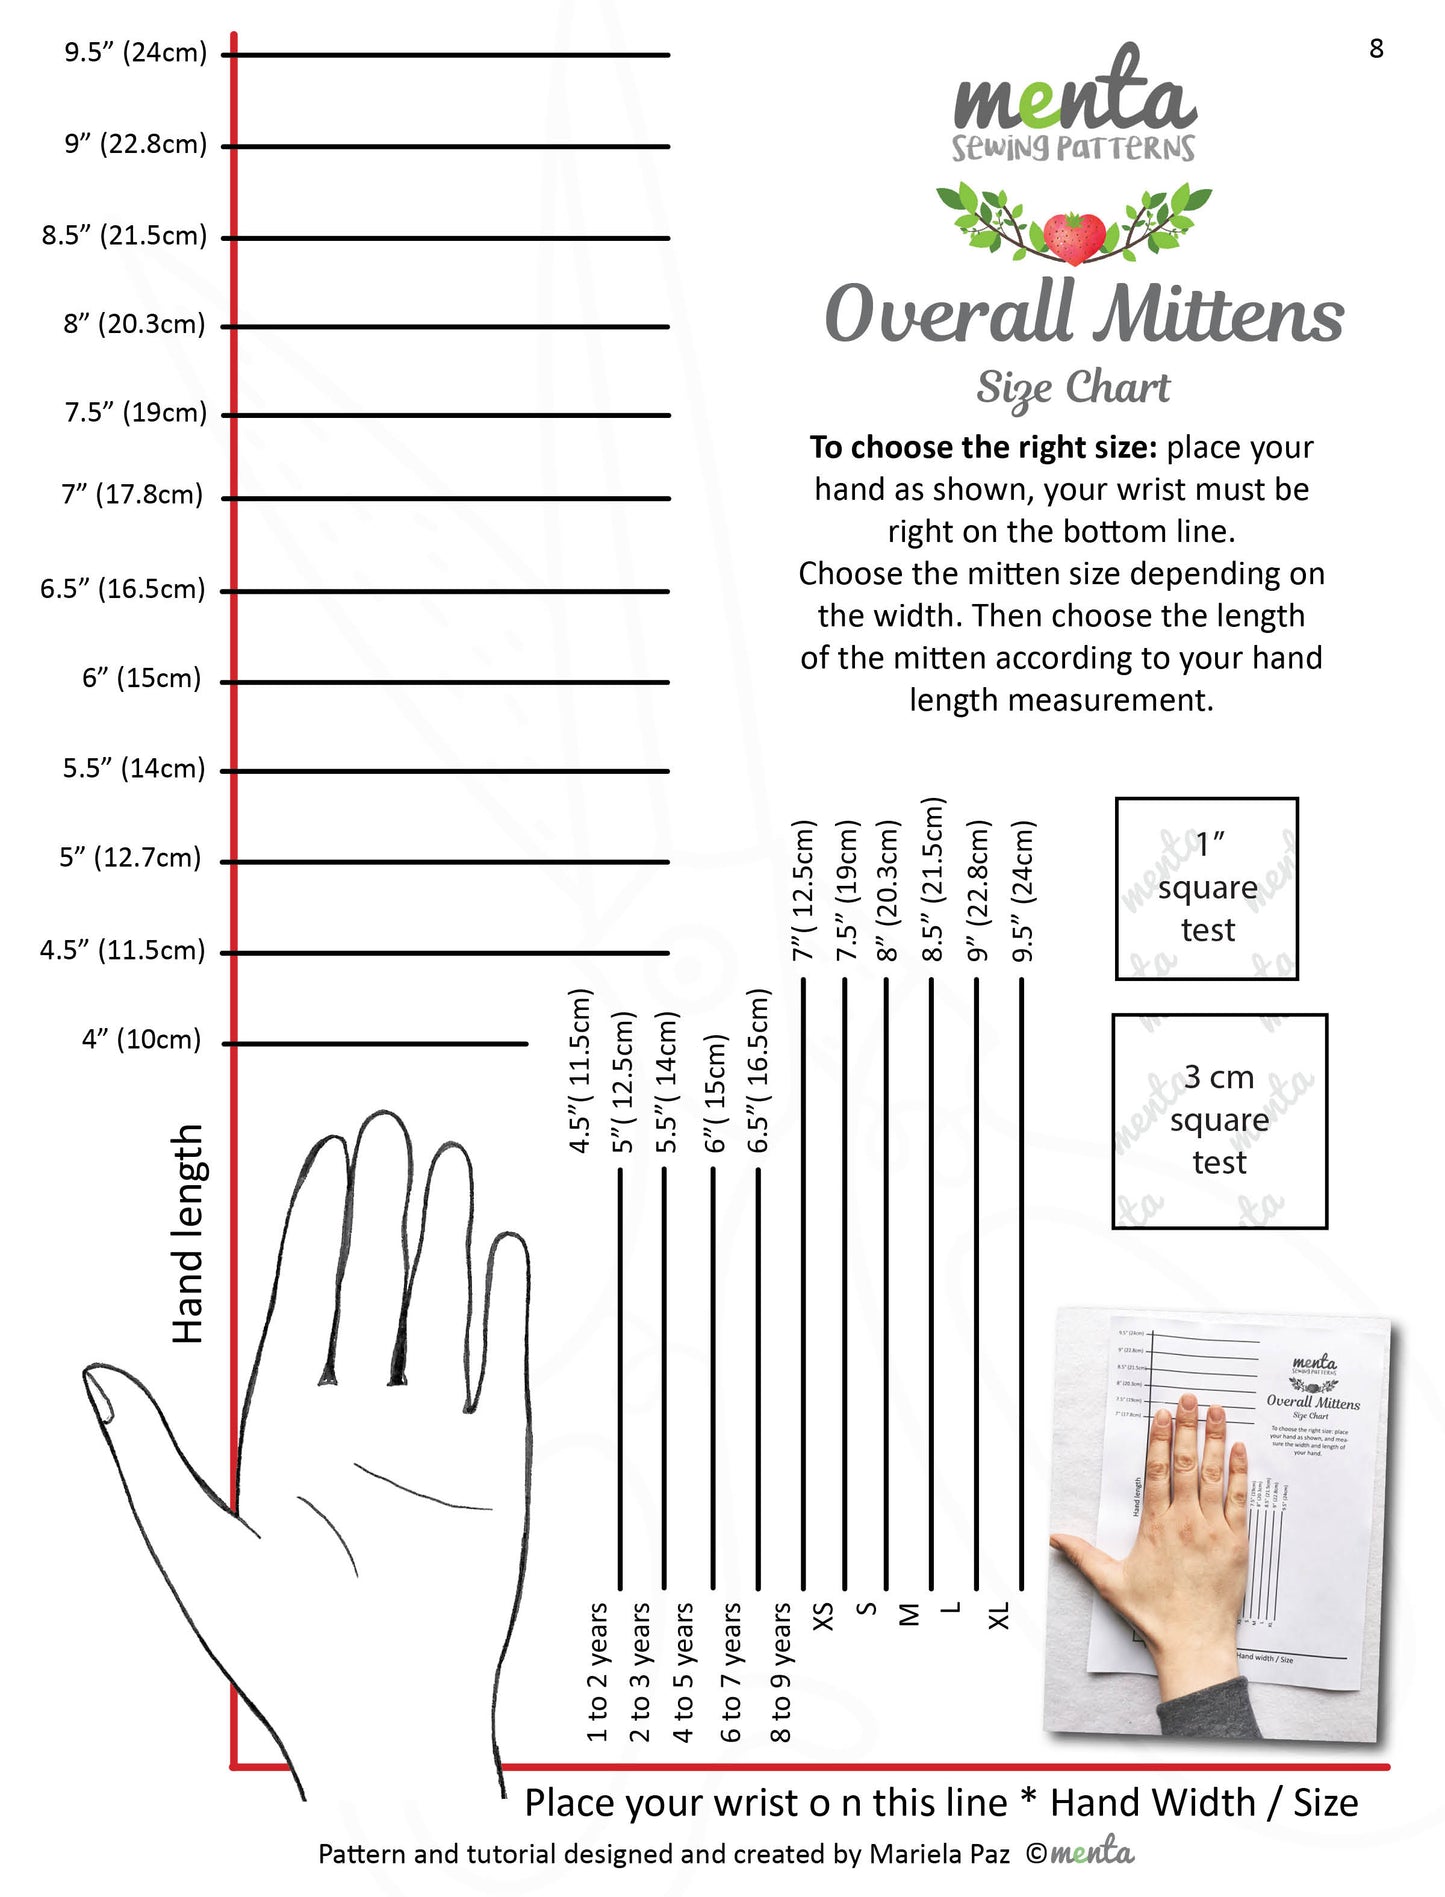 SMALL Overall Menta Mittens (Children)